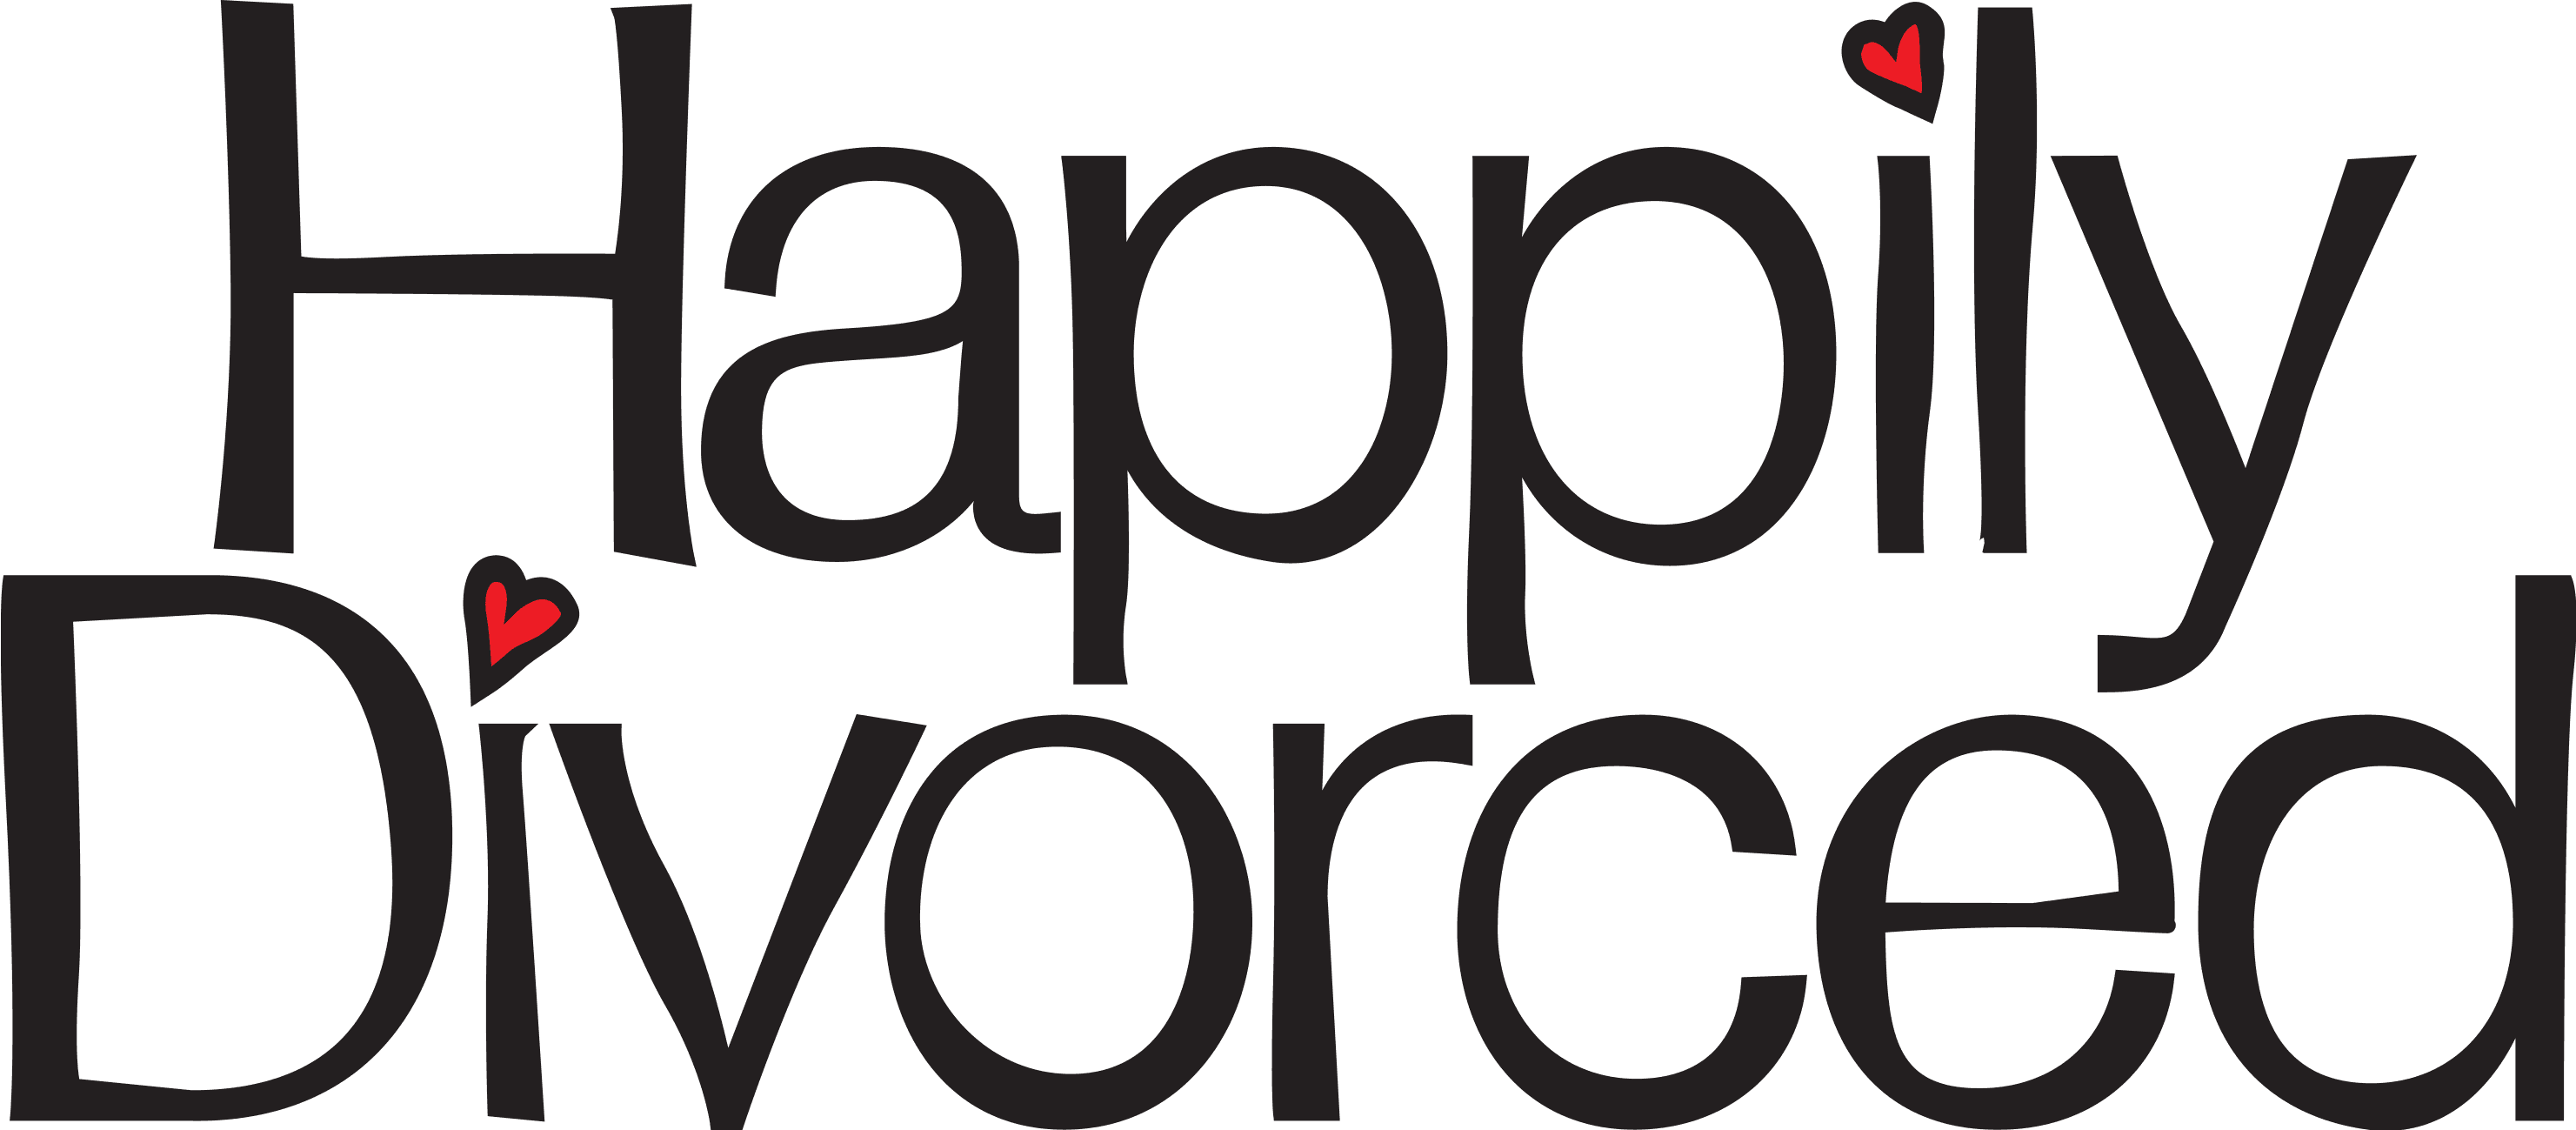 Happily Divorced logo